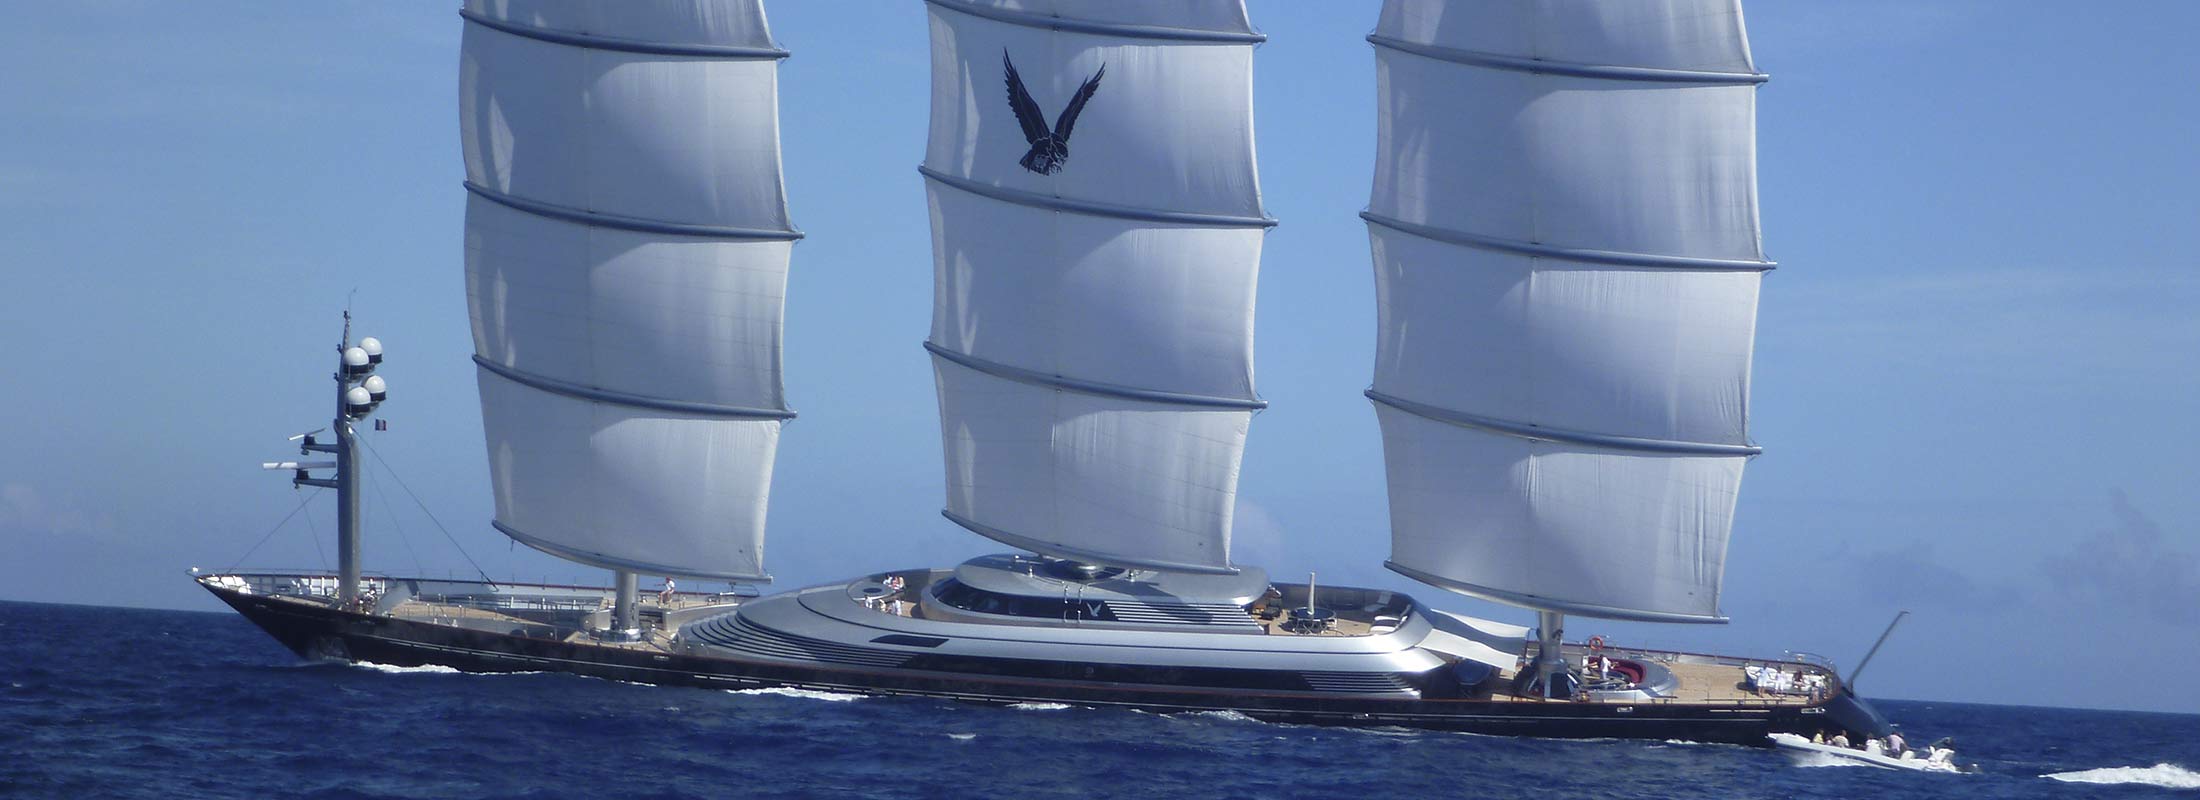 Maltese Falcon Sailing Yacht for Charter Mediterranean slider 3